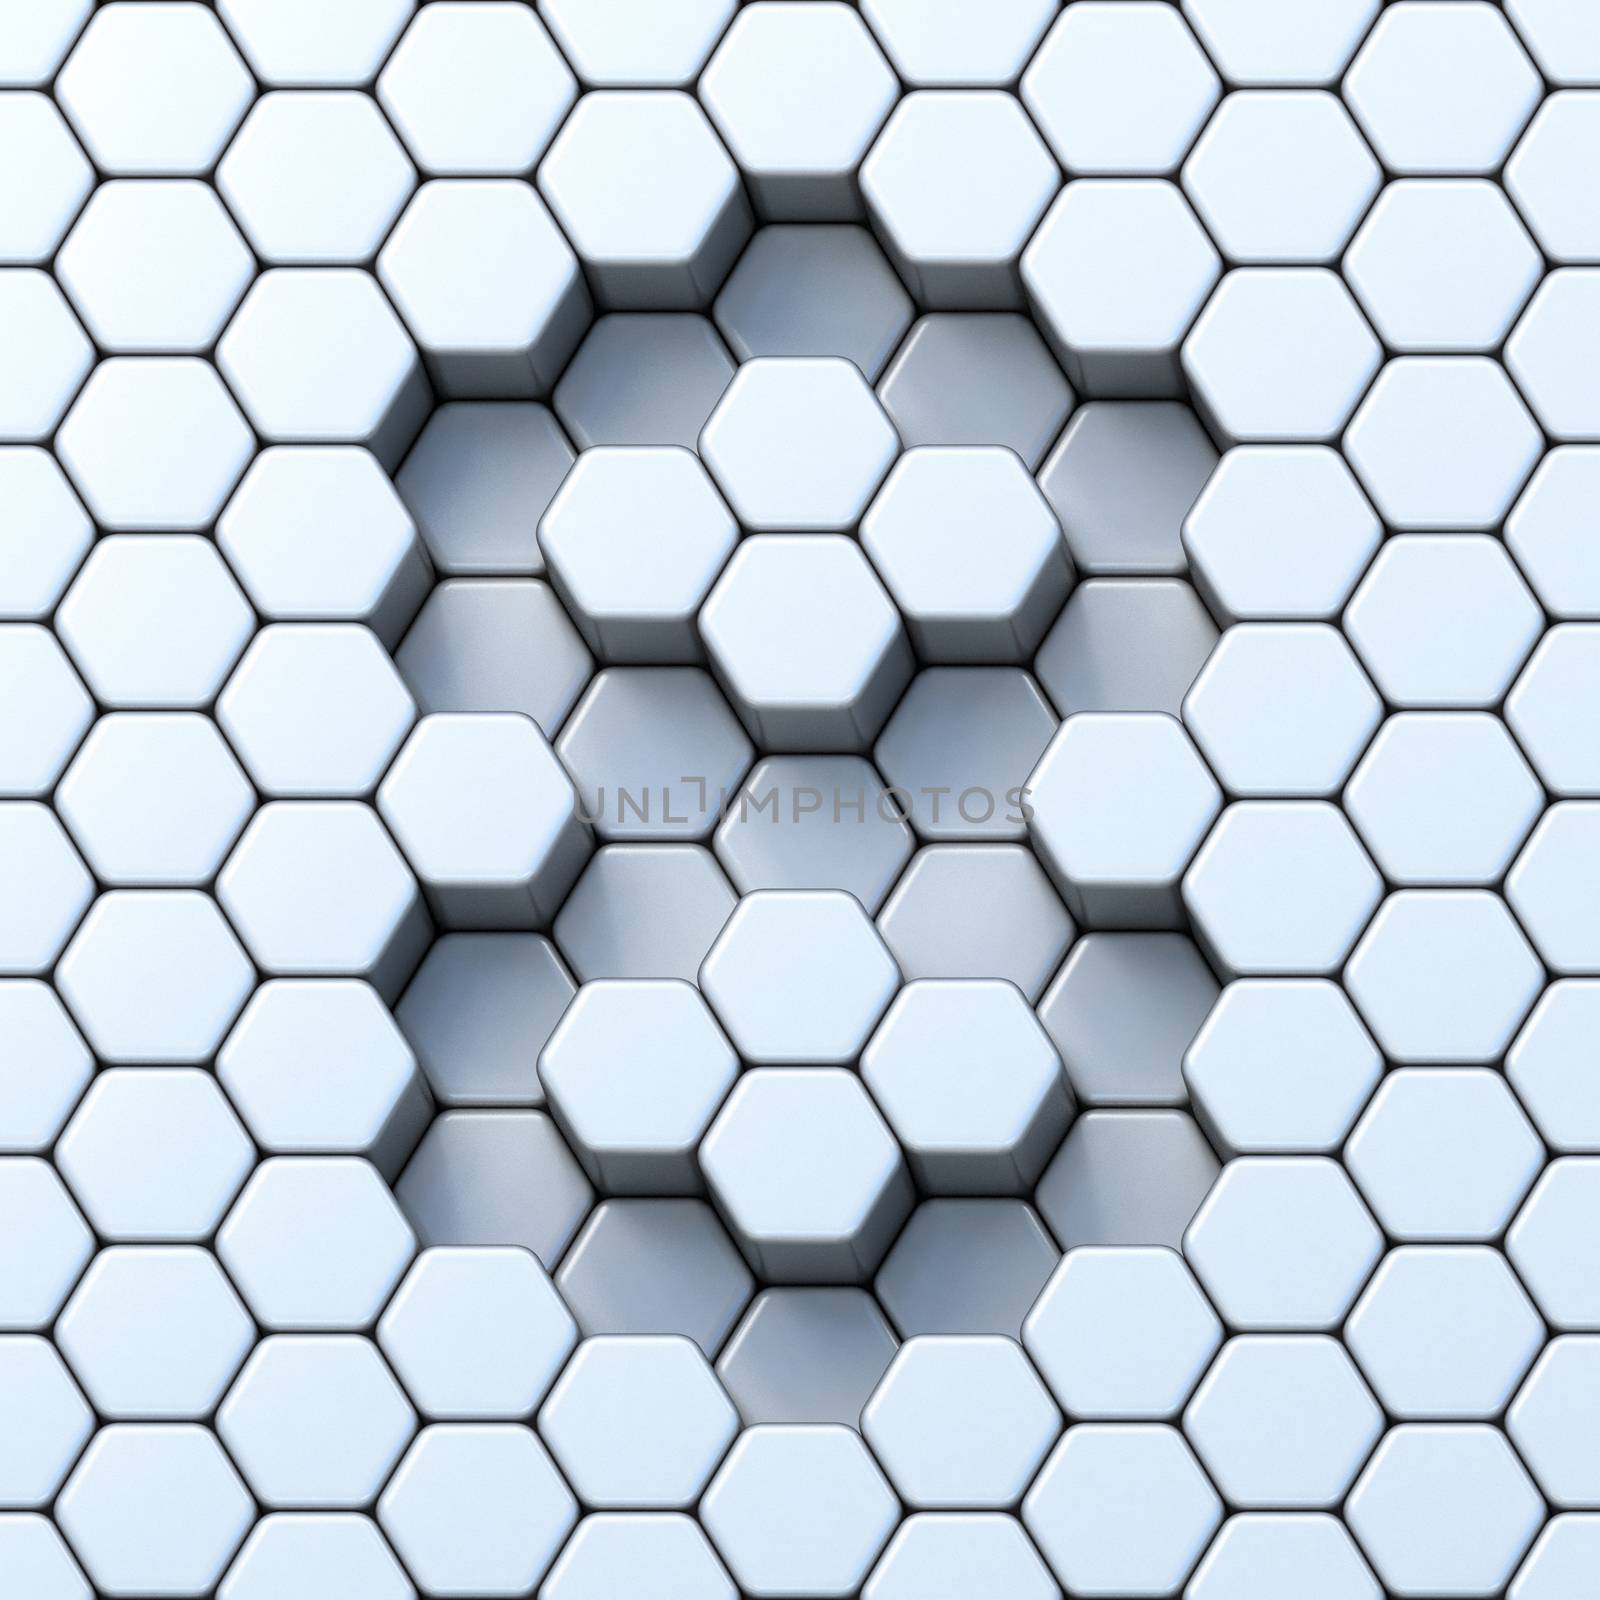 Hexagonal grid number EIGHT 8 3D render illustration